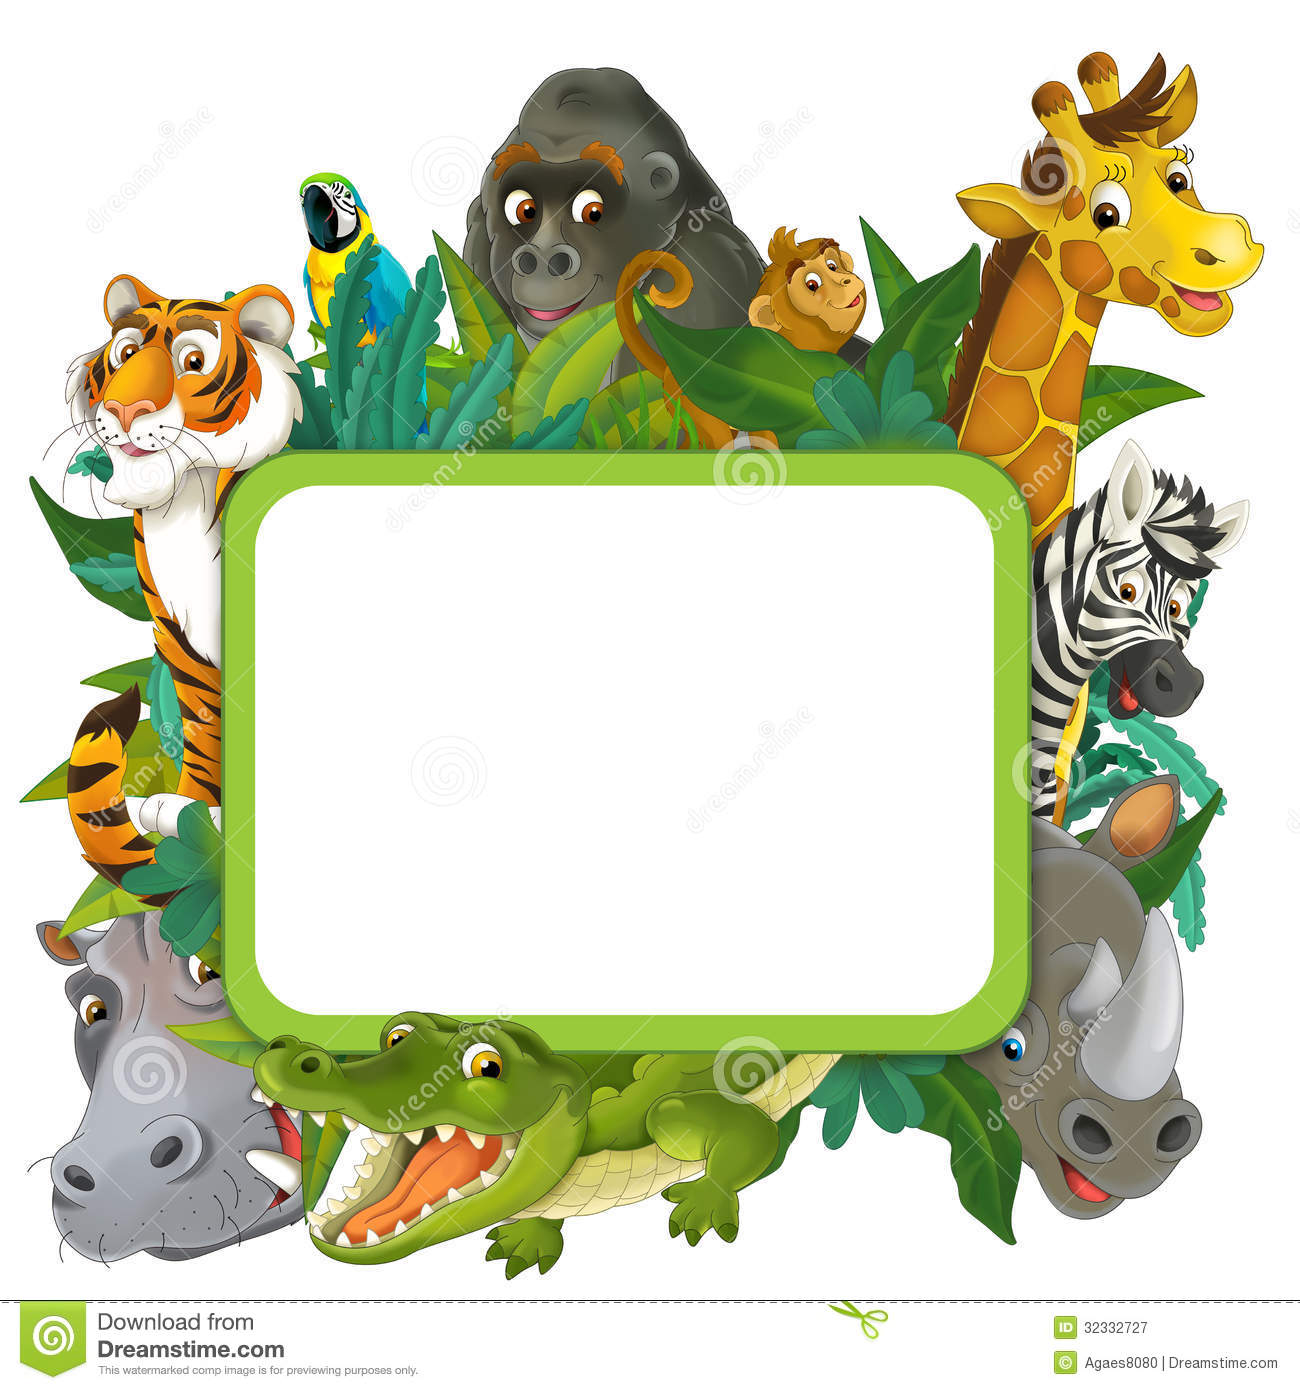 Jungle Safari Theme Illustration For The Children Royalty